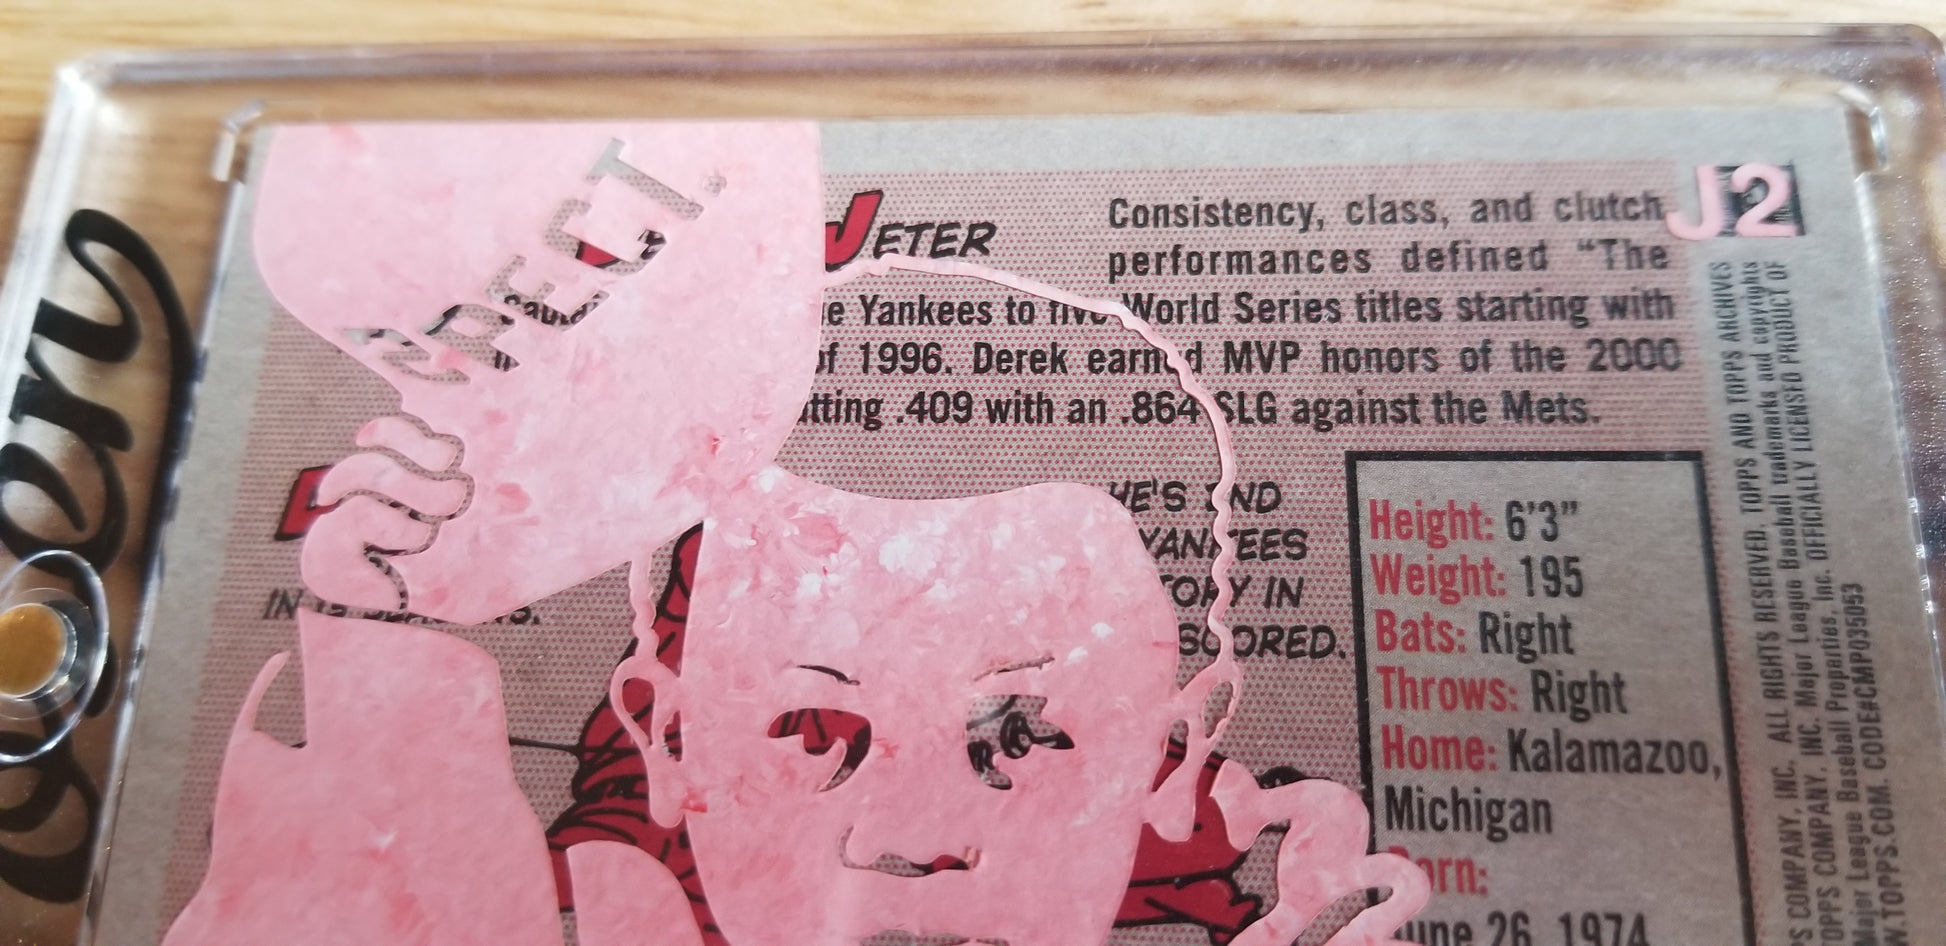 Baseball card art by Matthew Lee Rosen (aka Matthew Rosen) - Derek Jeter Respect